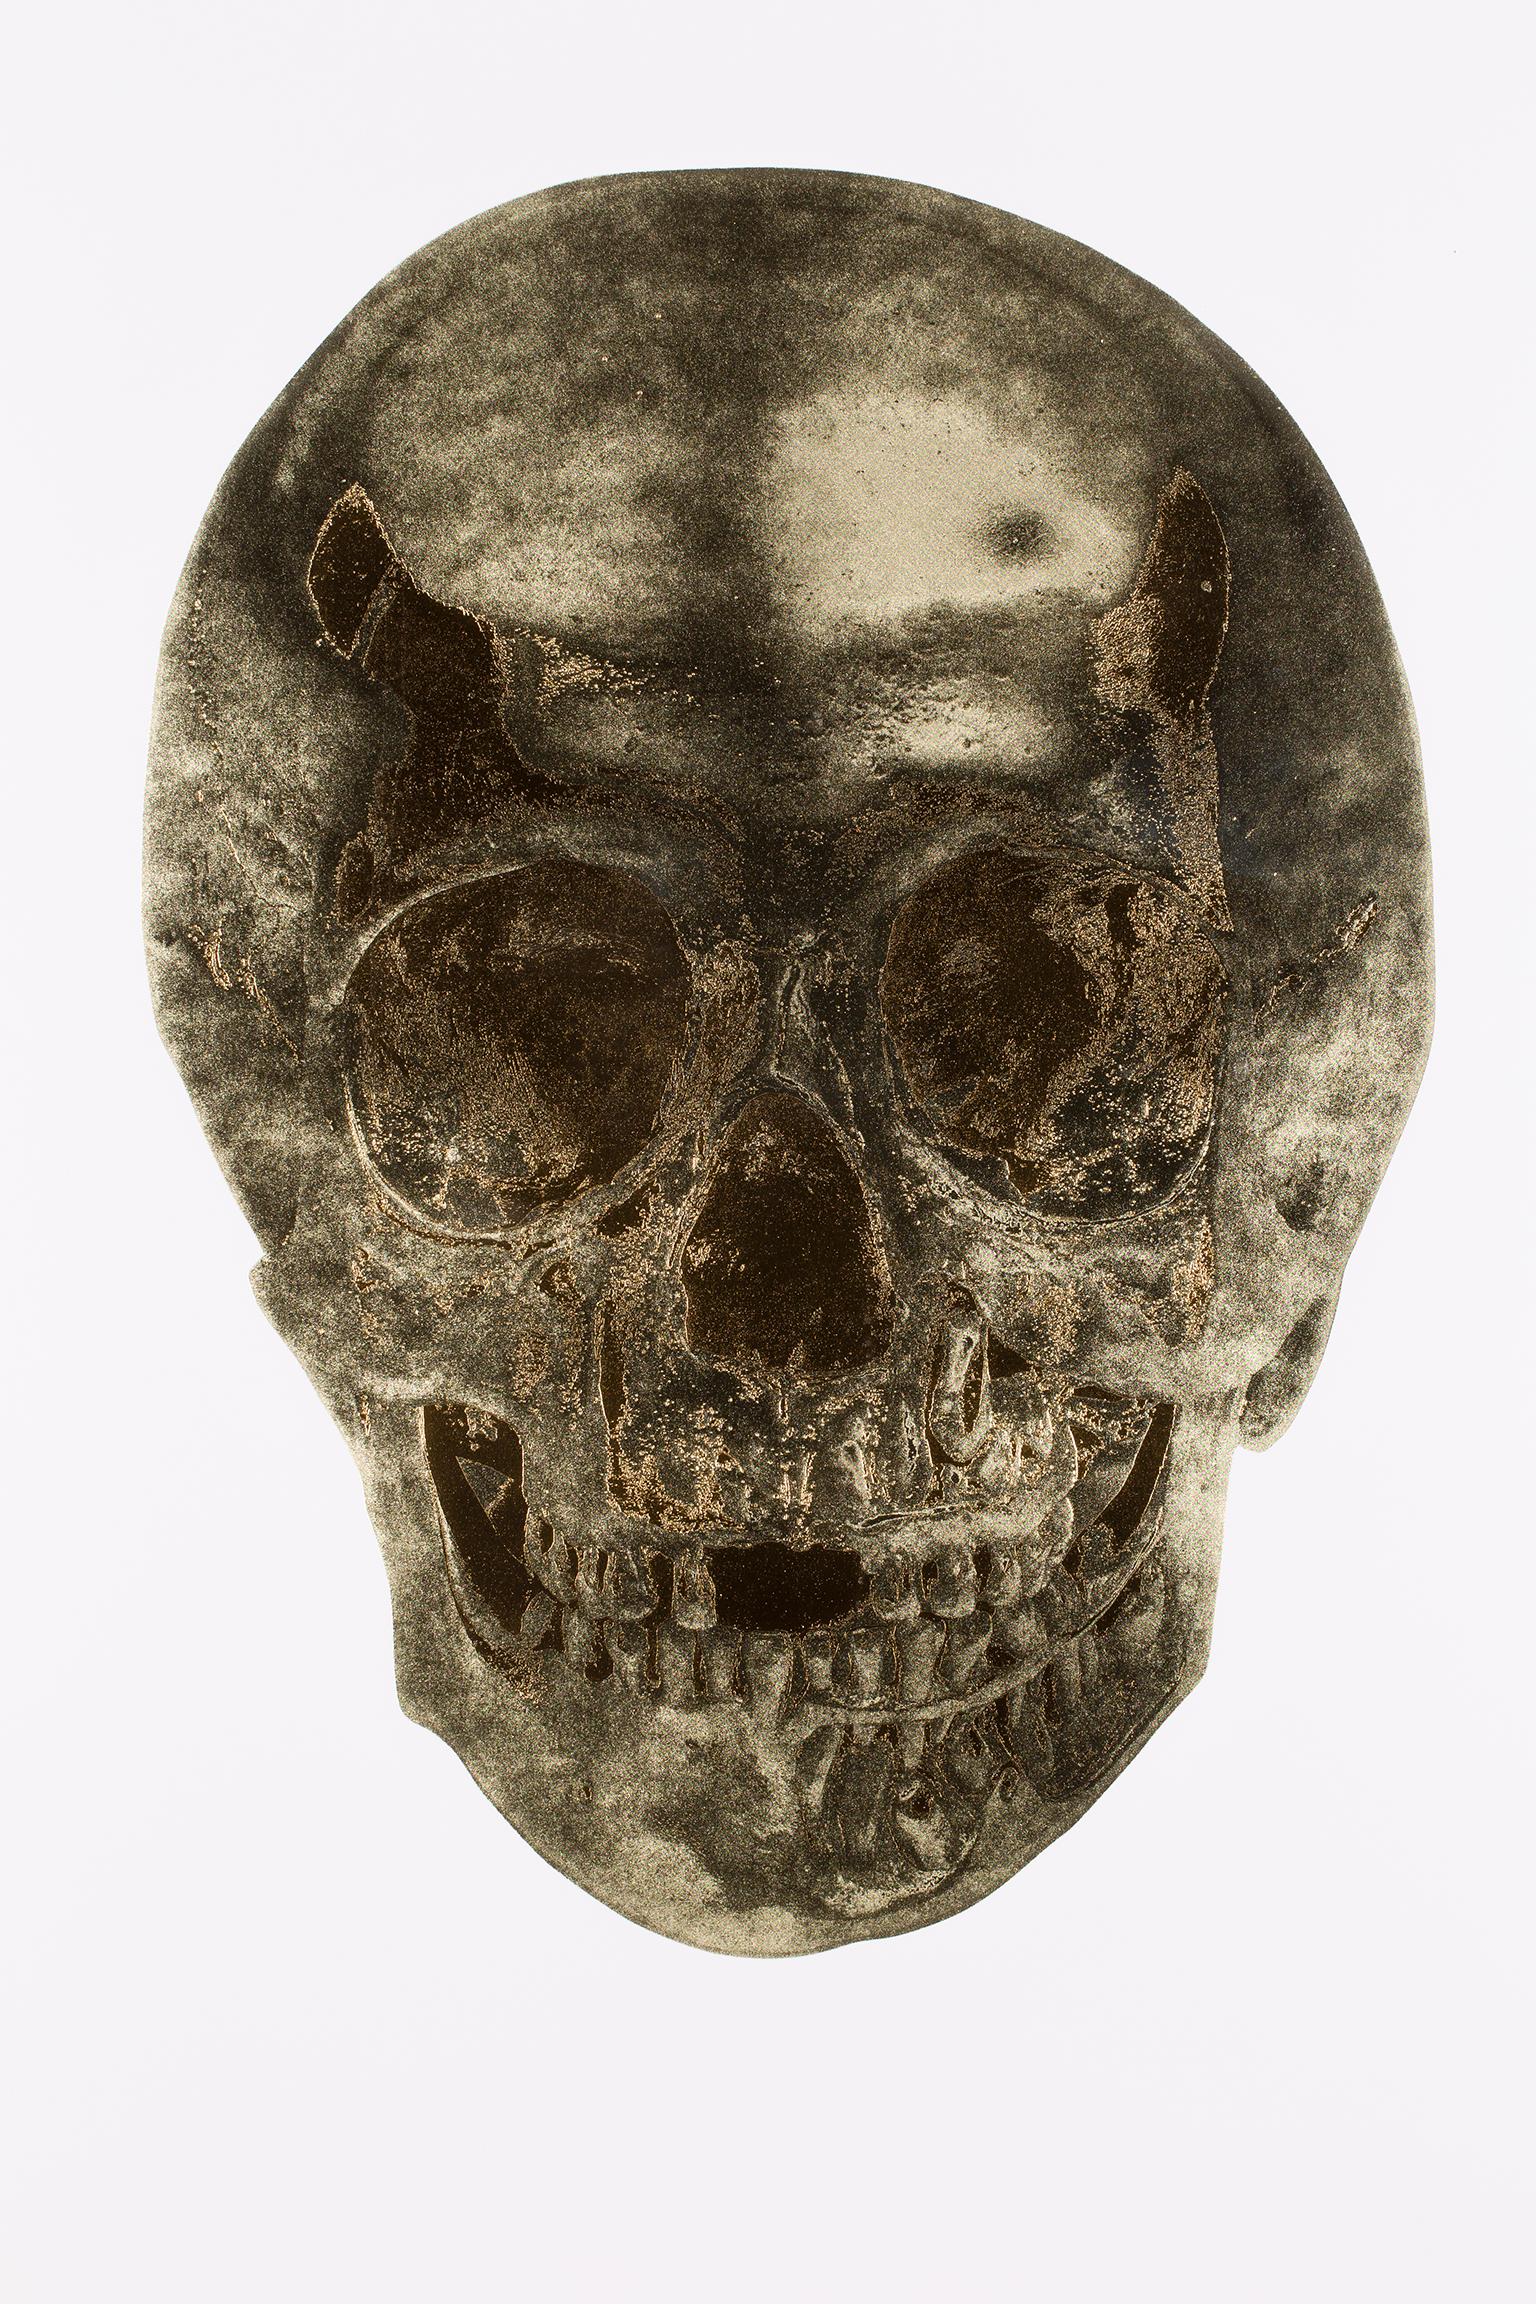 Damien Hirst Figurative Print - Death or Glory - Glorius Skull (Cool Gold - European Gold)